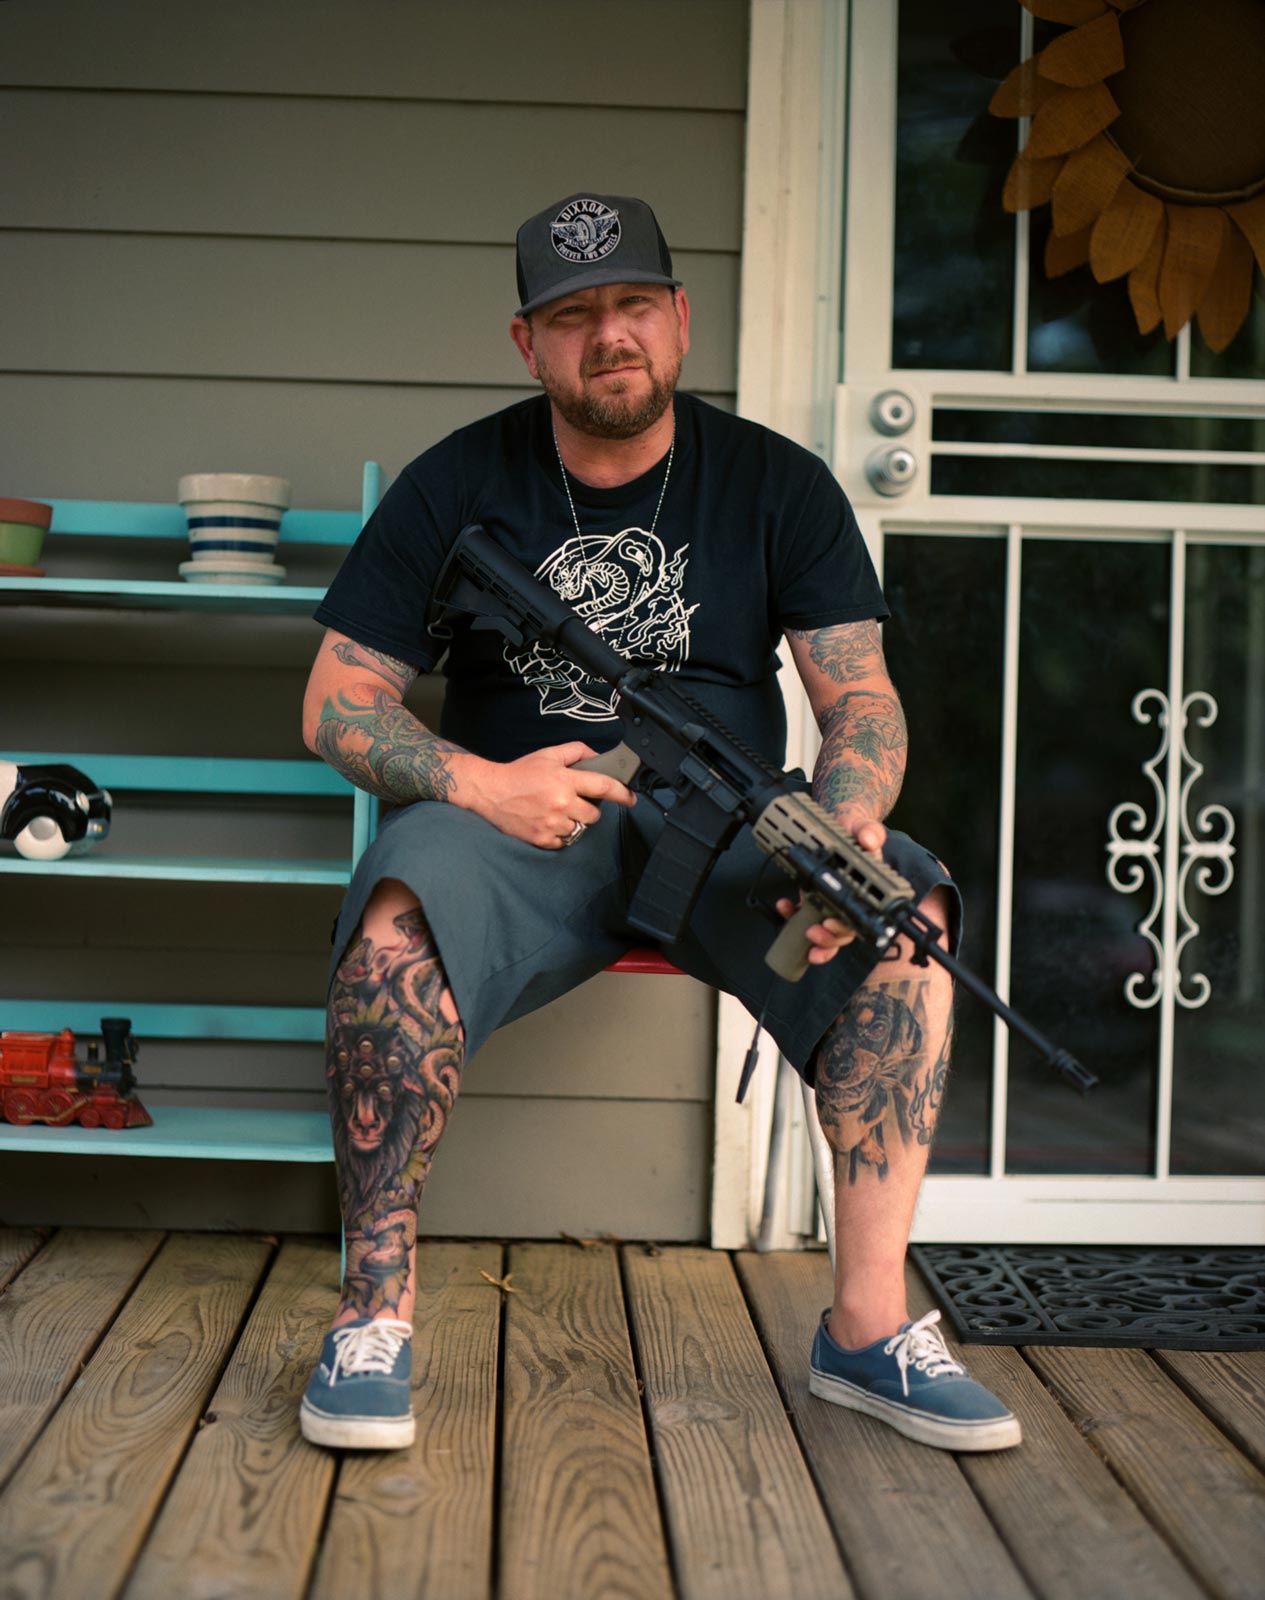 Derek showing his AK47 on his front porch in Memphis.